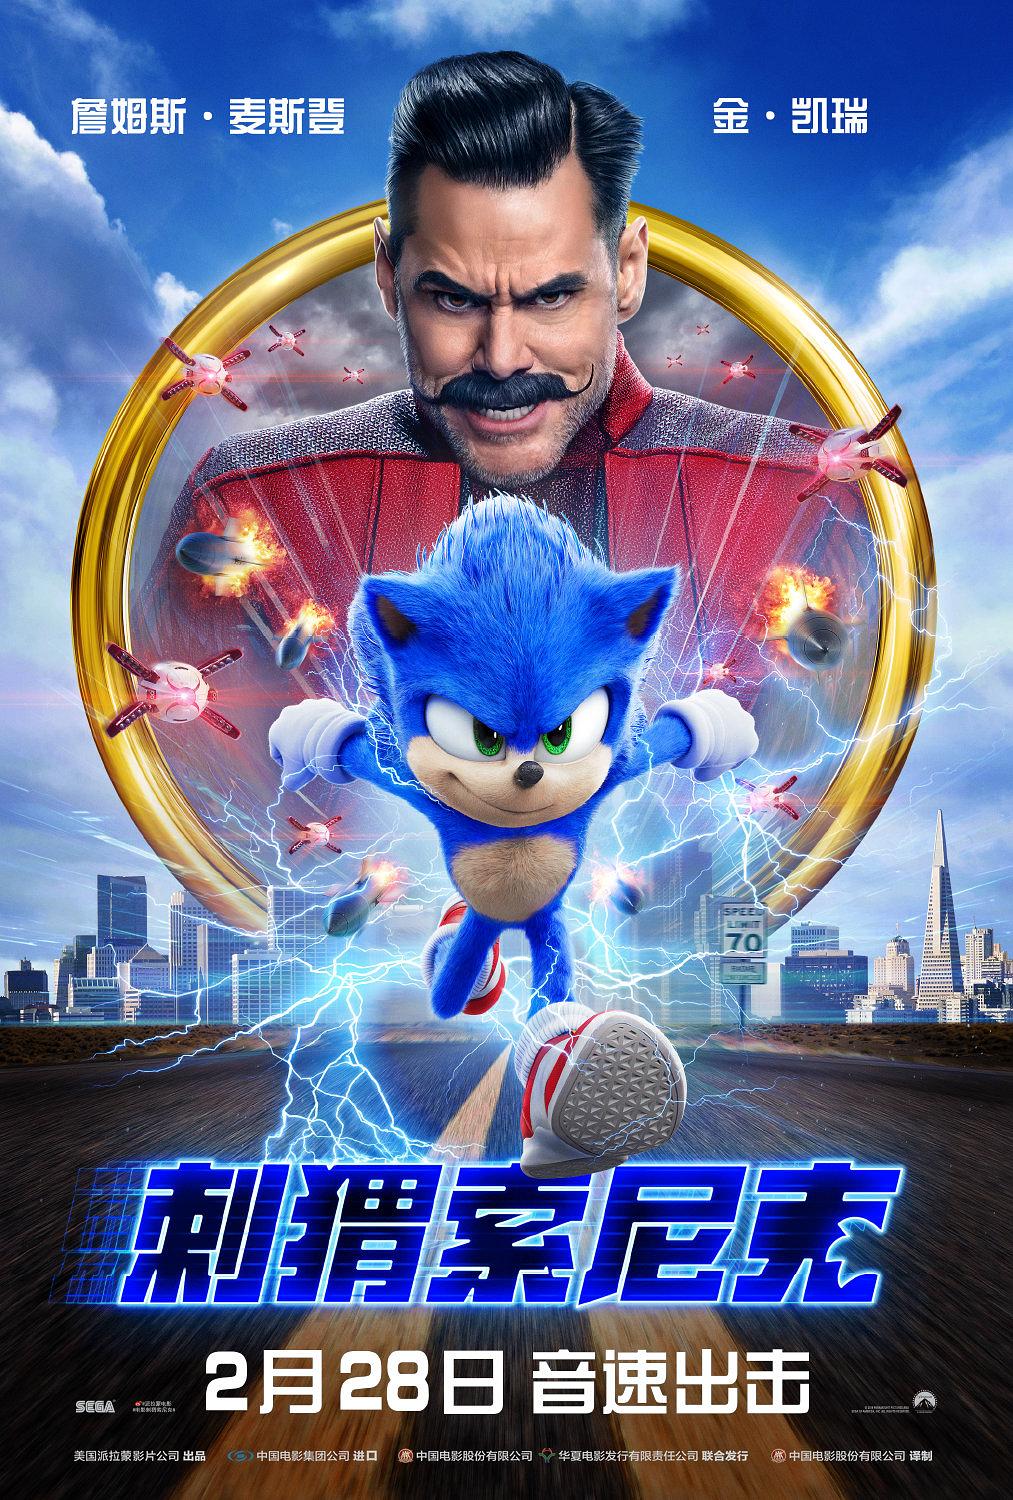 刺猬索尼克/超音鼠大电影 Sonic.the.Hedgehog.2020.1080p.KORSUB.HDRip.x264.AAC2.0-STUTTERSHIT 4.61GB-1.png